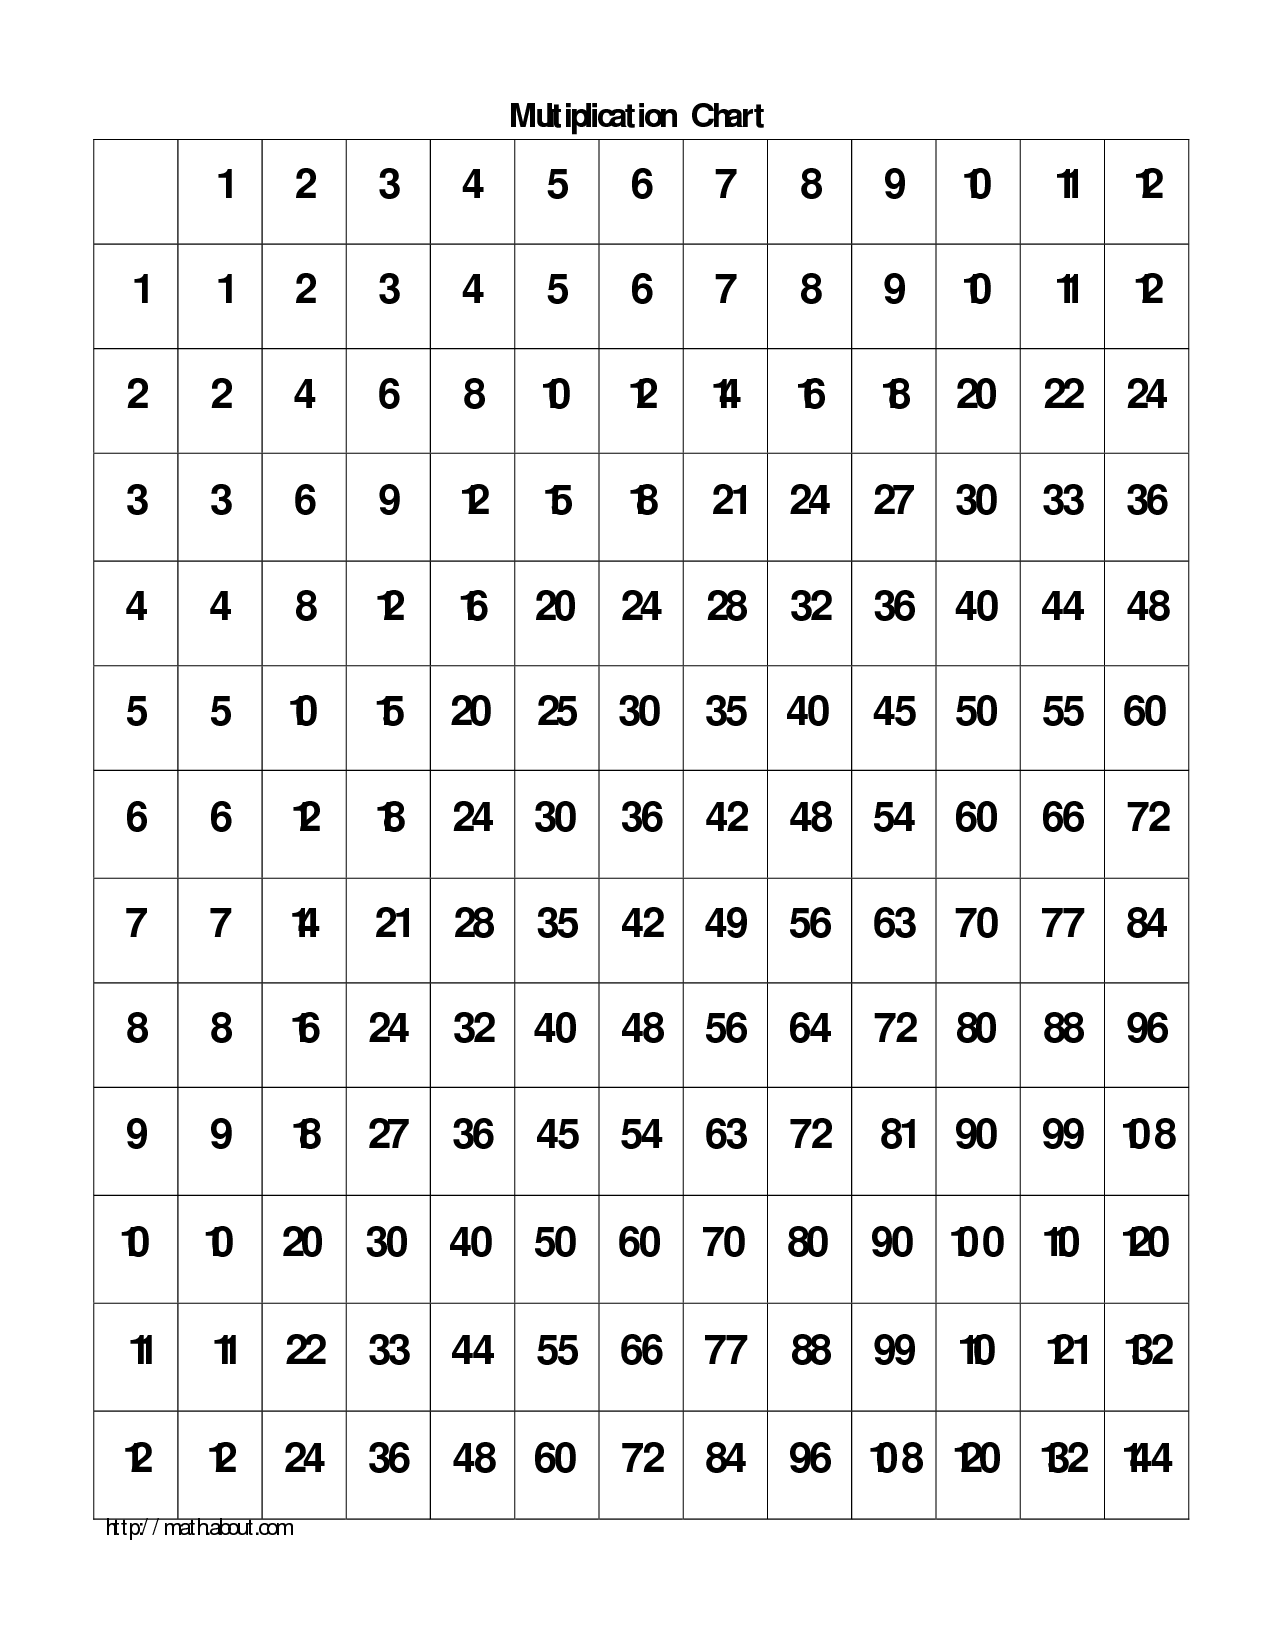 Multiplication Chart 0-12 Image